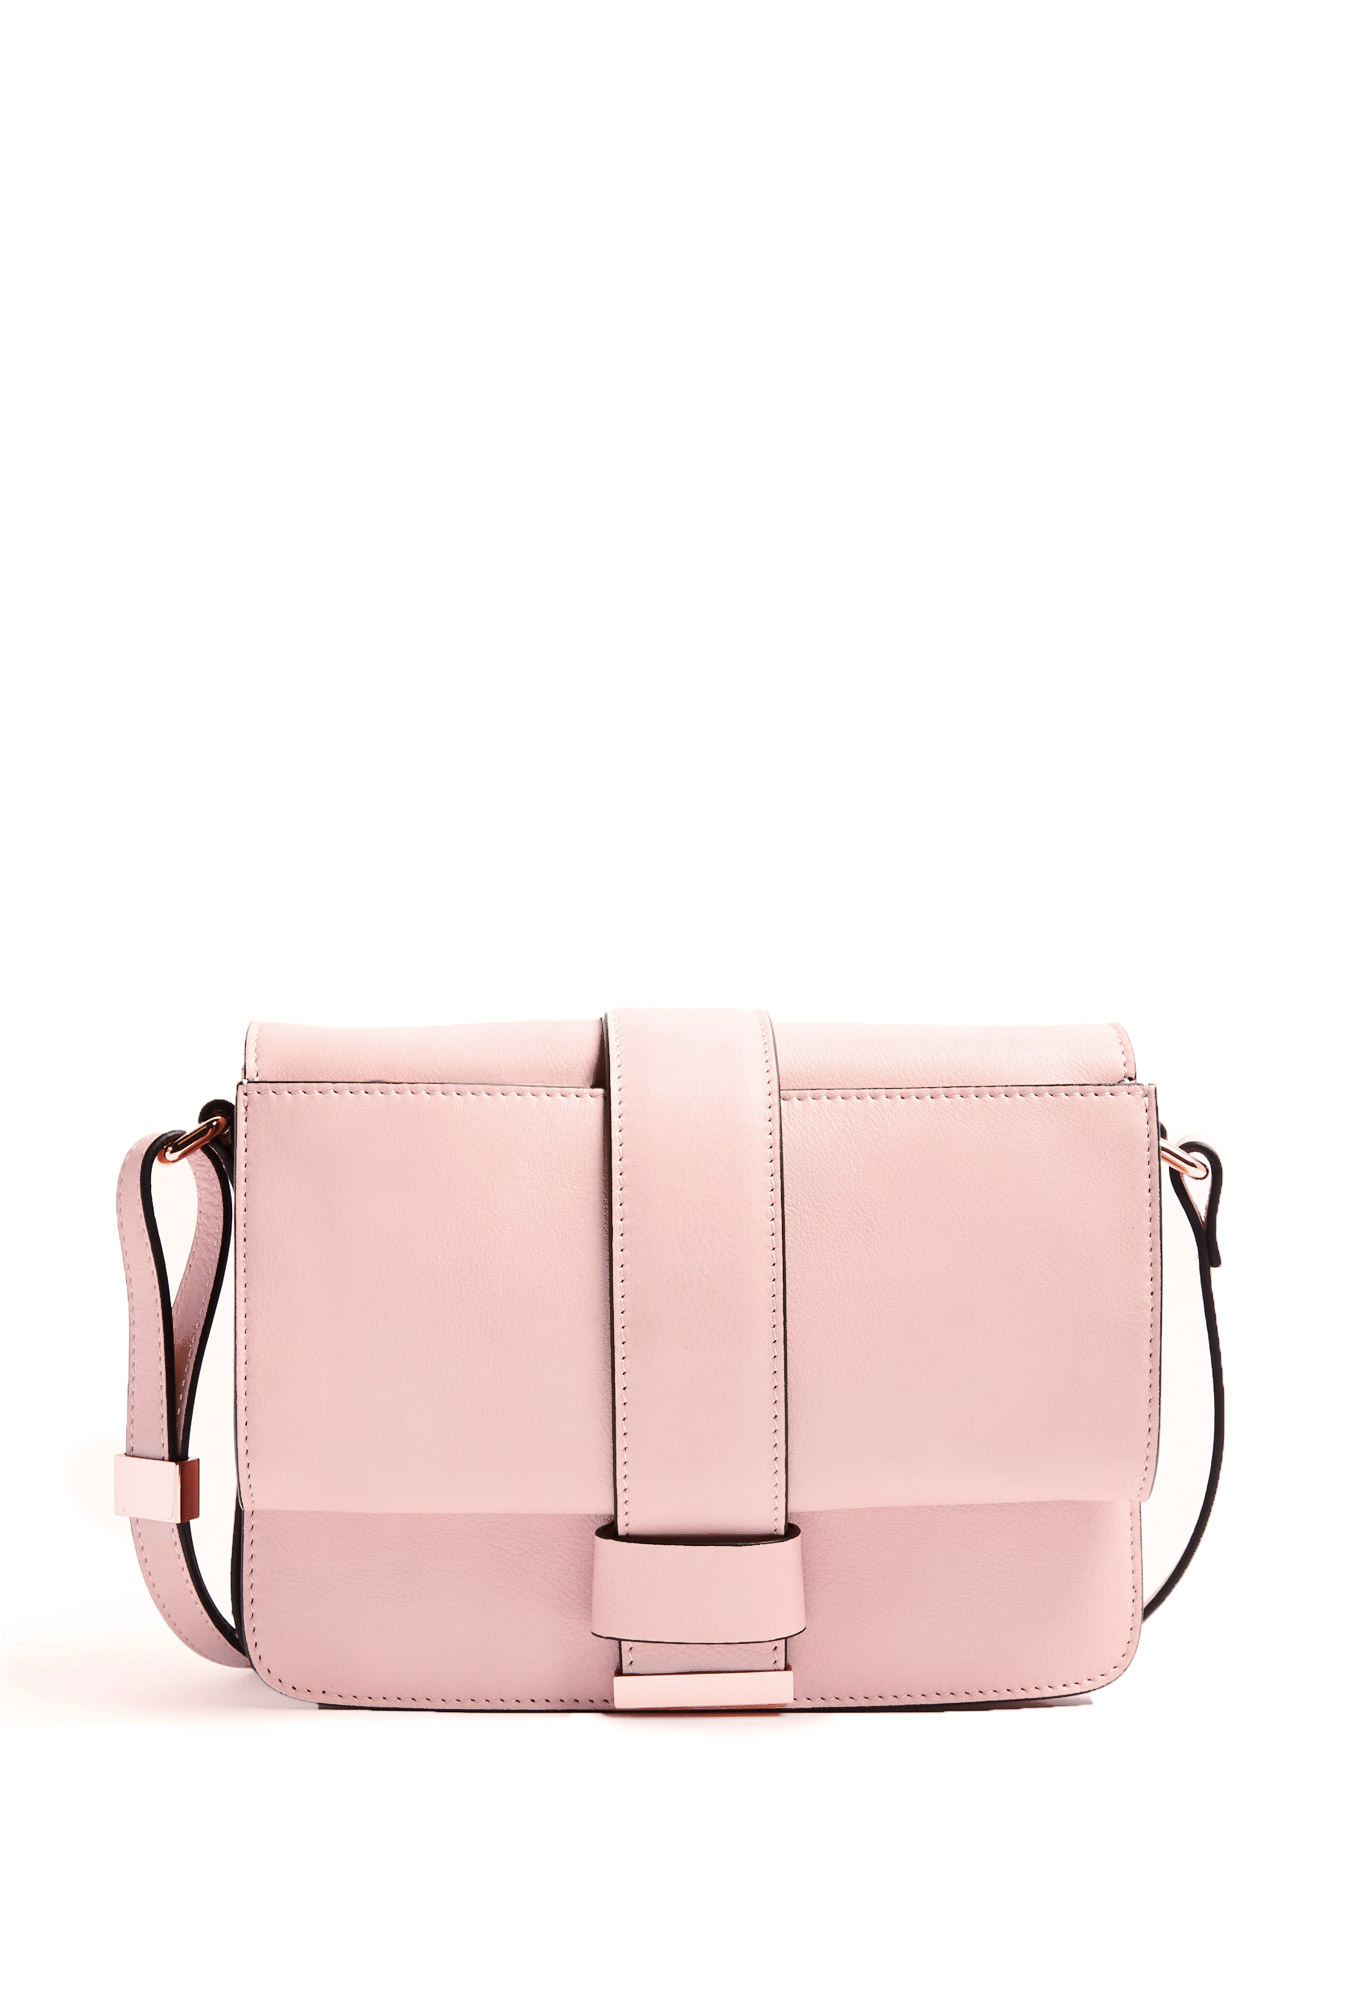 Cedric Charlier Pink Cross Body Gold Hardwear Box Bag in Pink | Lyst